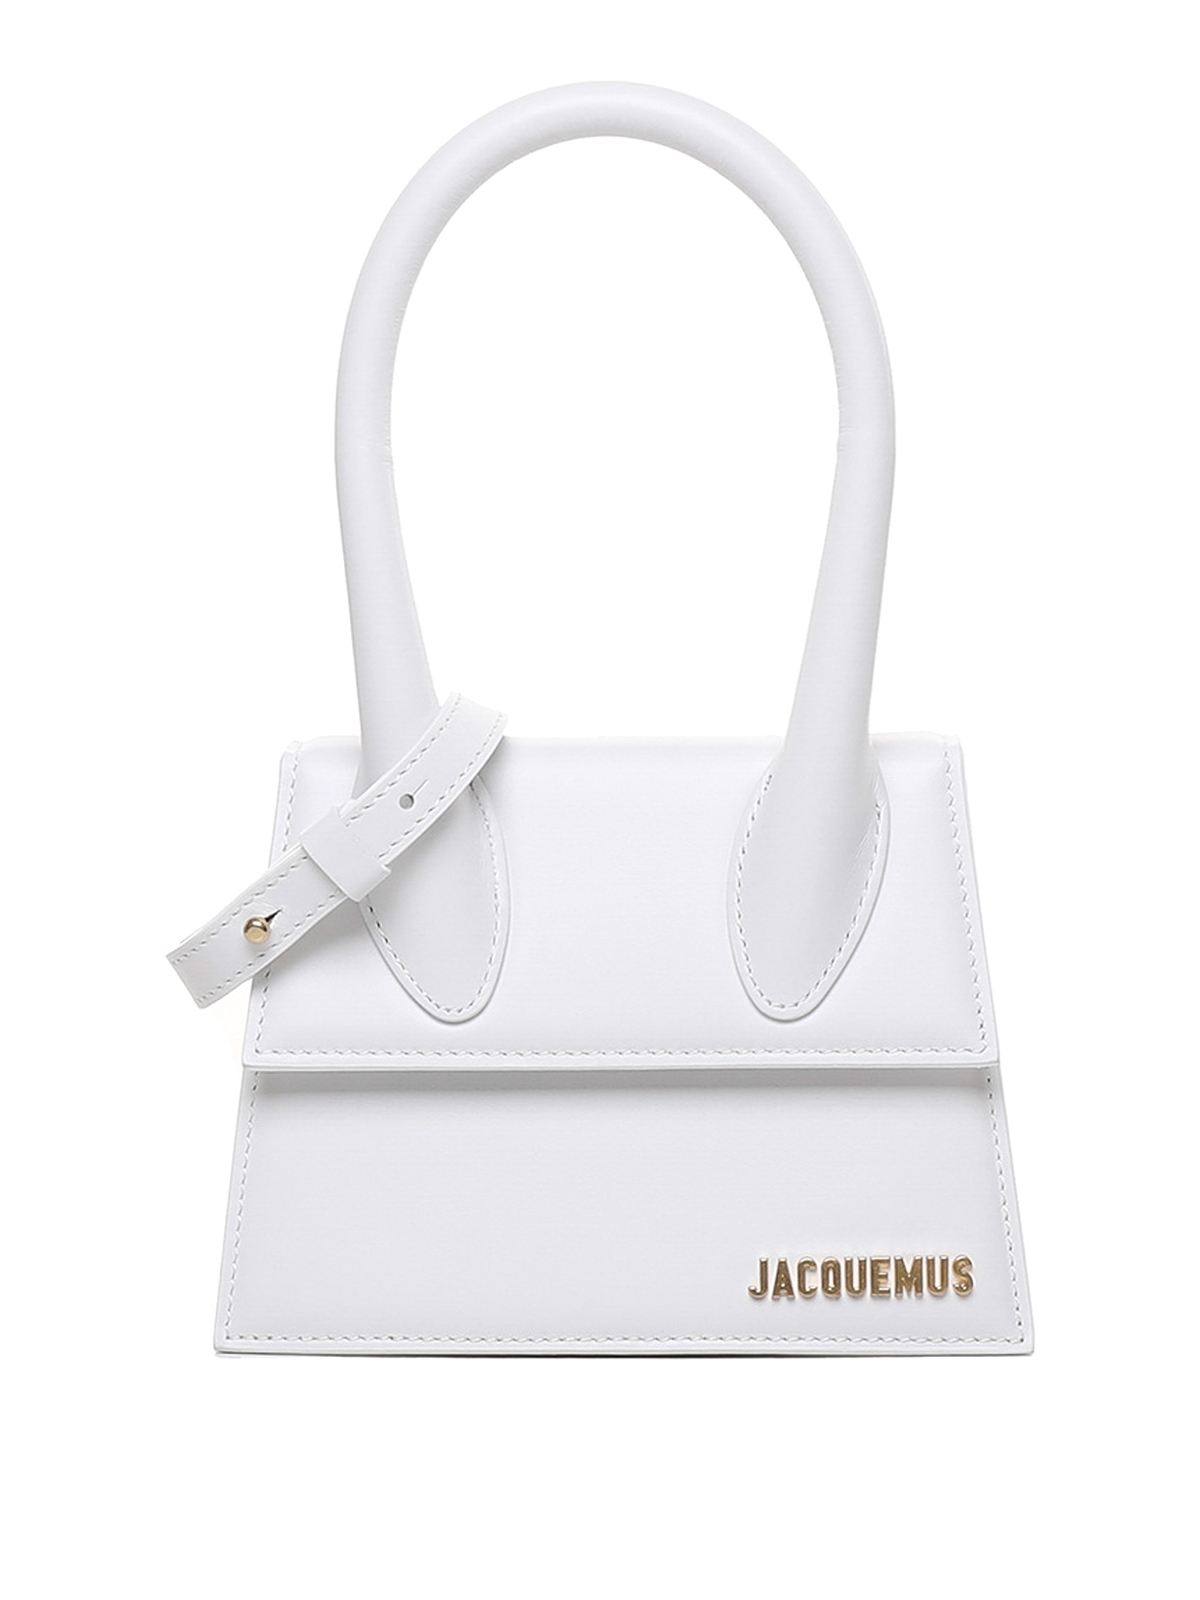 Jacquemus Chiquito Large Bag In Blanco